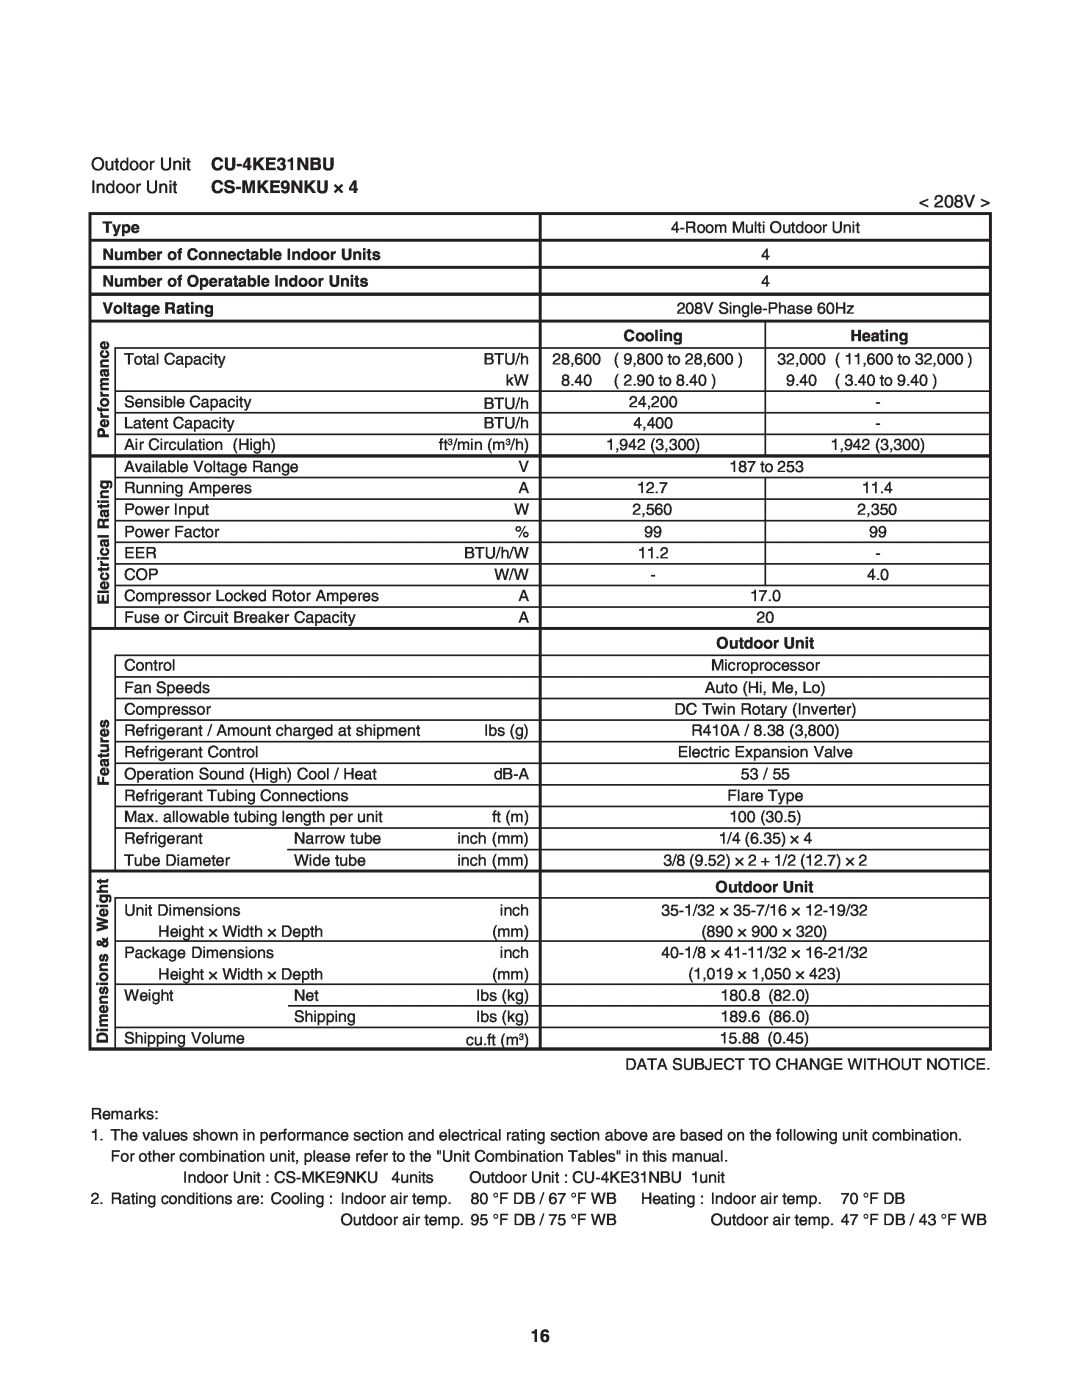 Panasonic CU-4KE24NBU Type, Number of Connectable Indoor Units, Number of Operatable Indoor Units, Voltage Rating, Cooling 